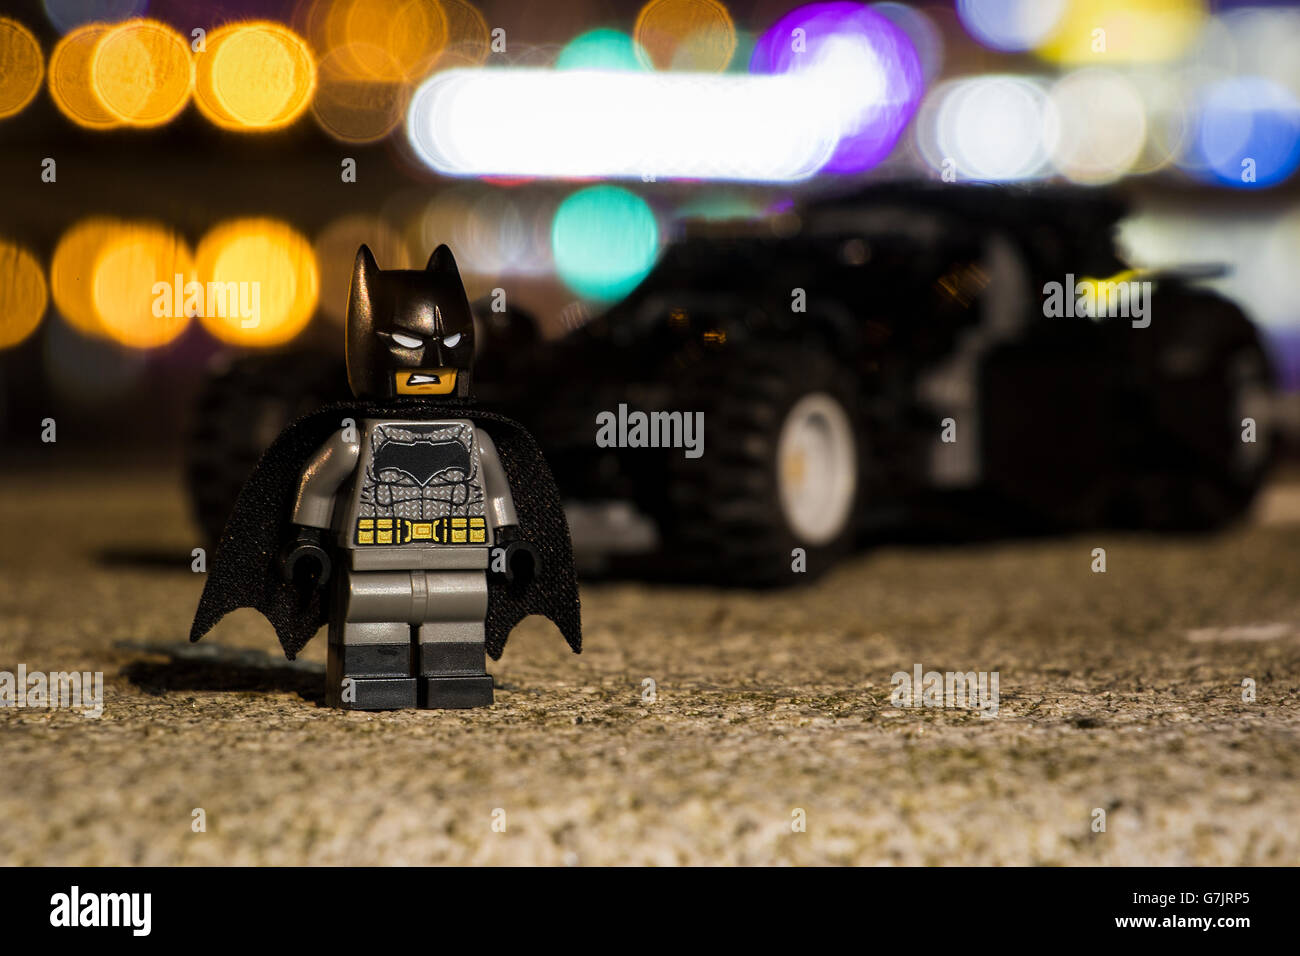 Lego Batman v Superman Stock Photo - Alamy